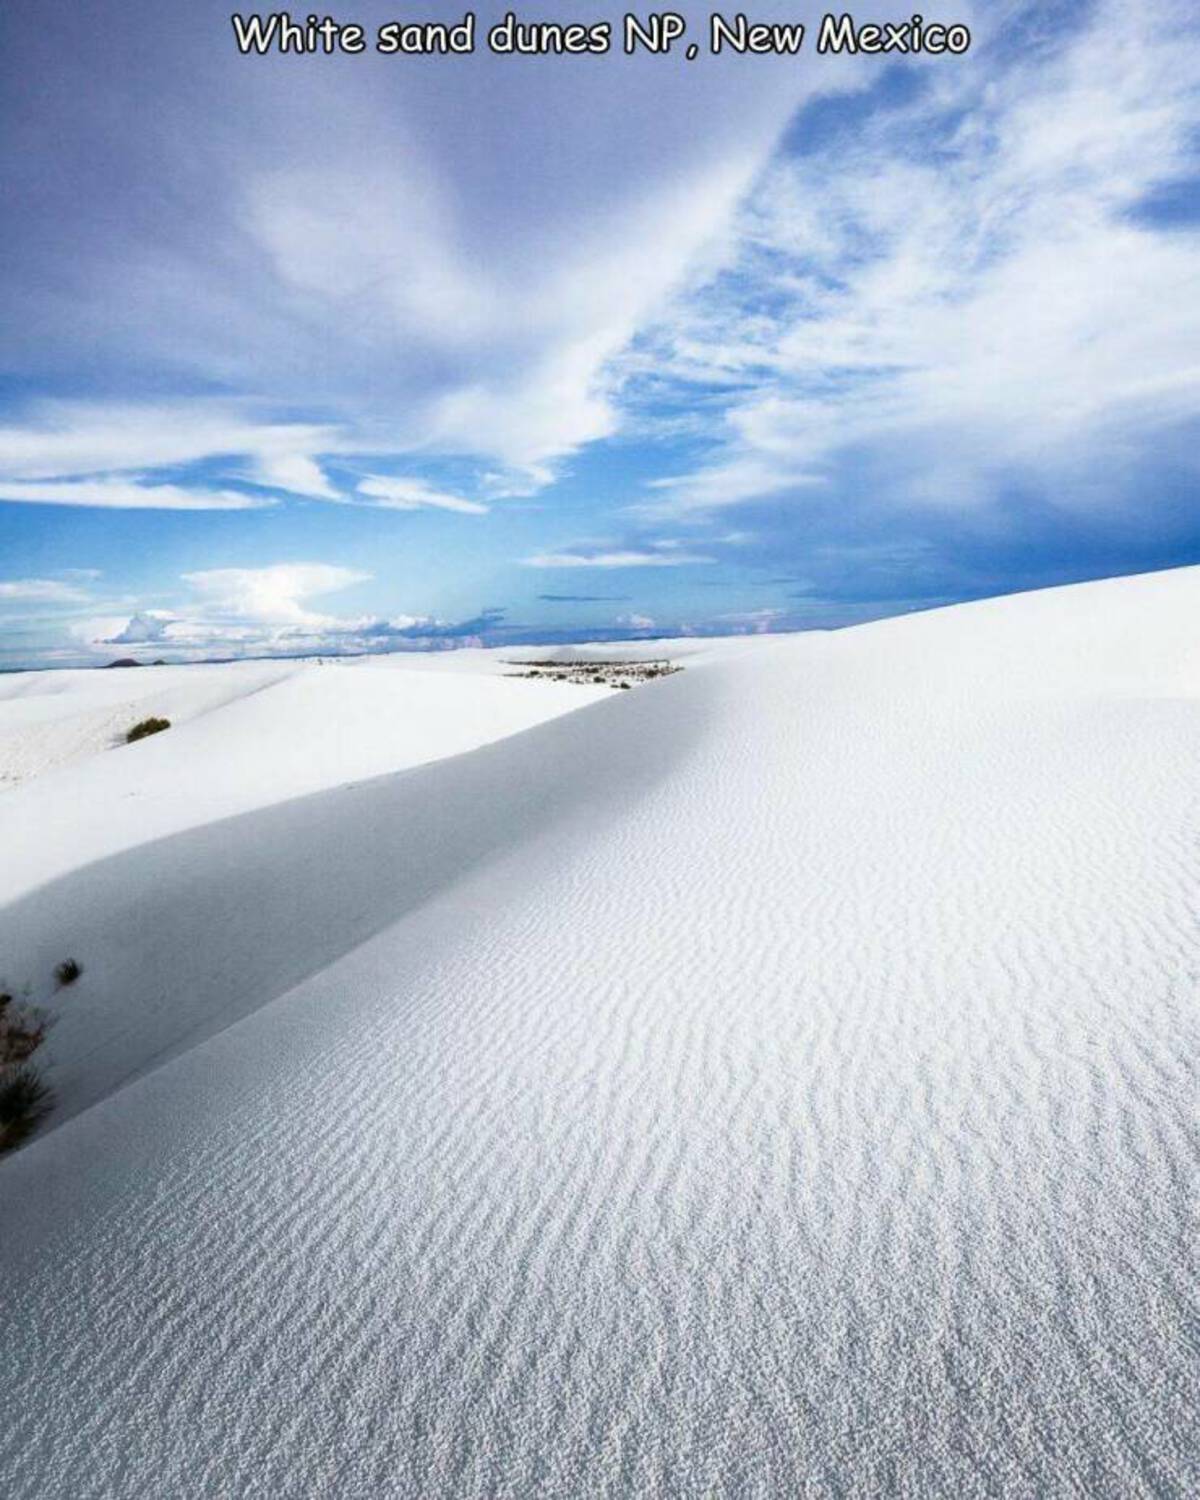 cool random pics - sky - White sand dunes Np, New Mexico